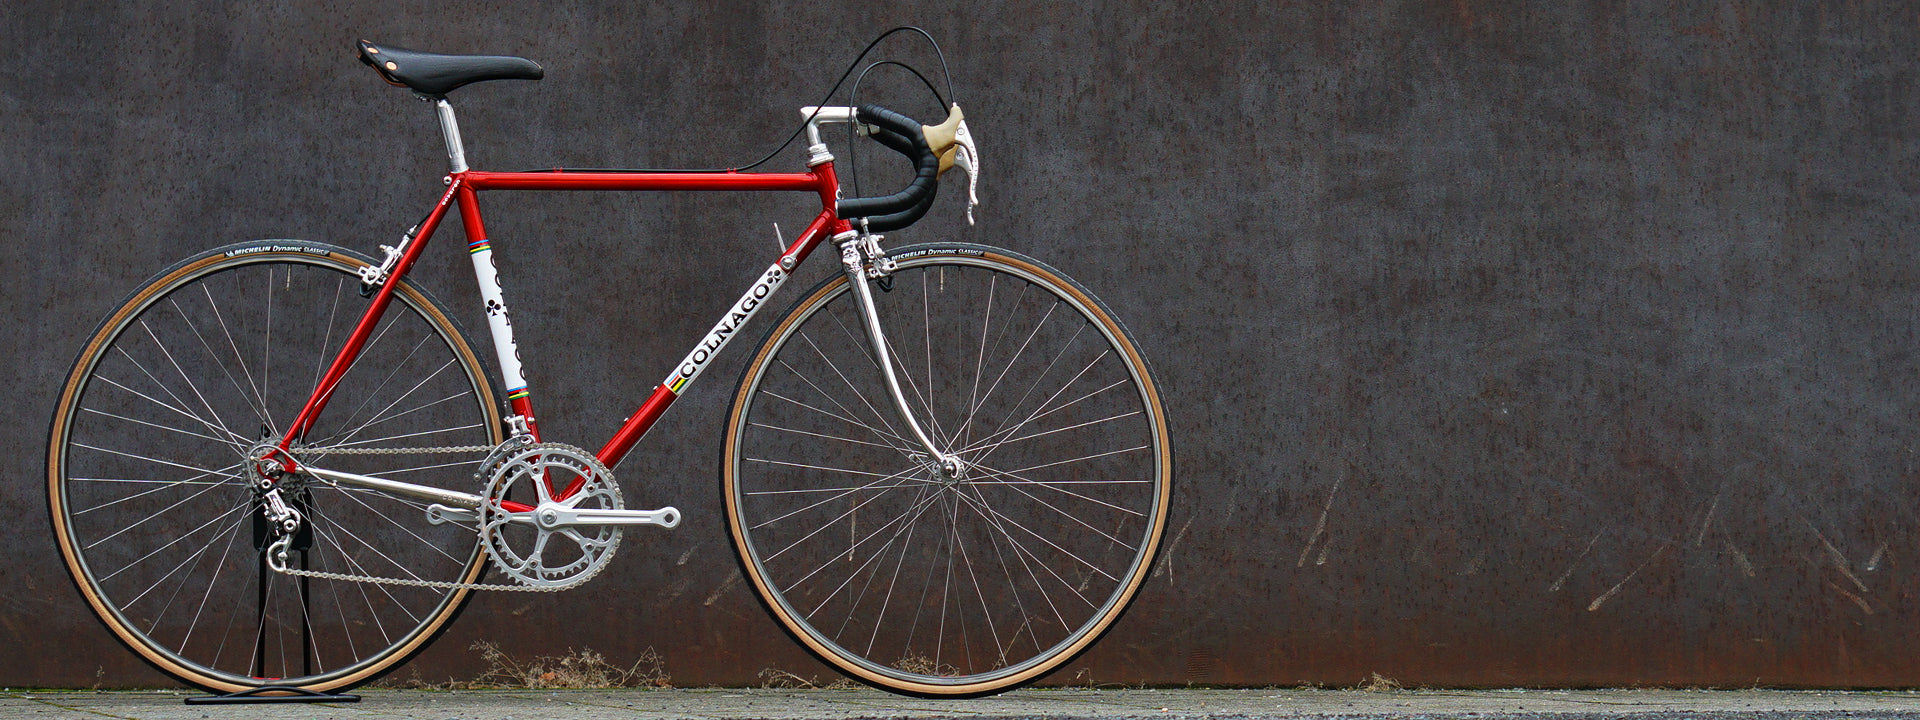 Steel Vintage Bikes  Online Shop for Vintage Bicycles, Parts & more